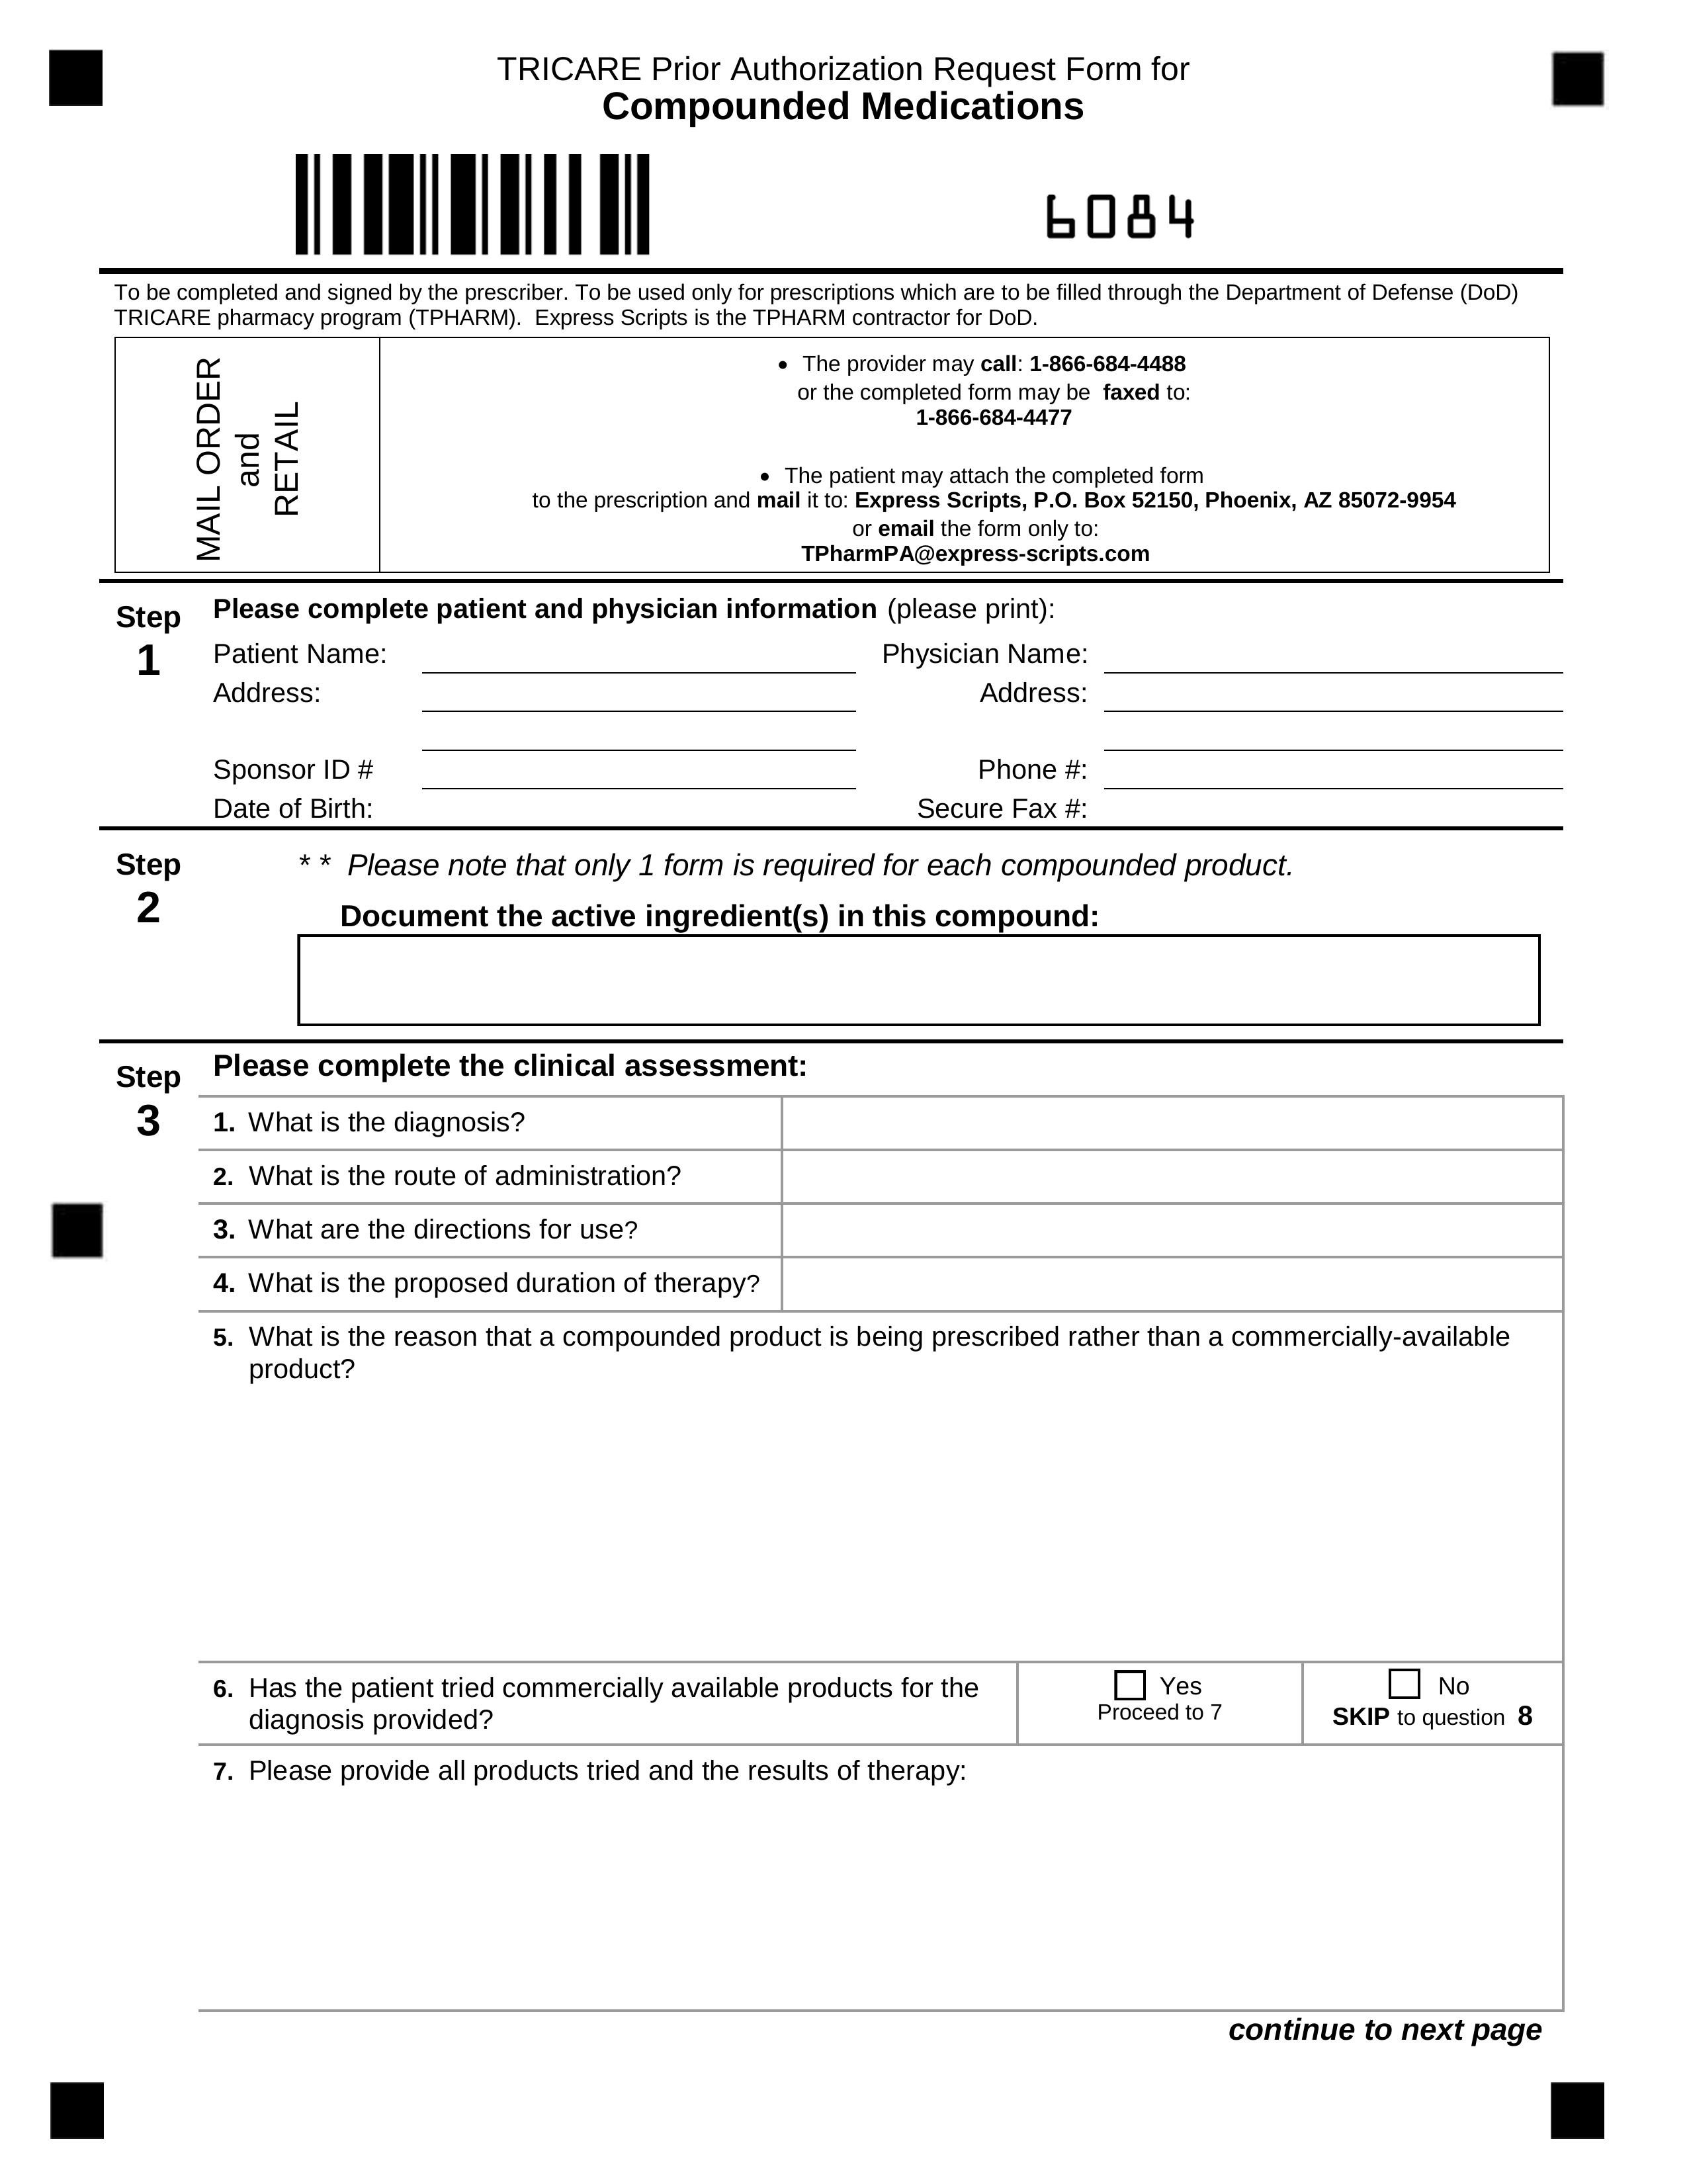 TRICARE Prior (Rx) Authorization Form